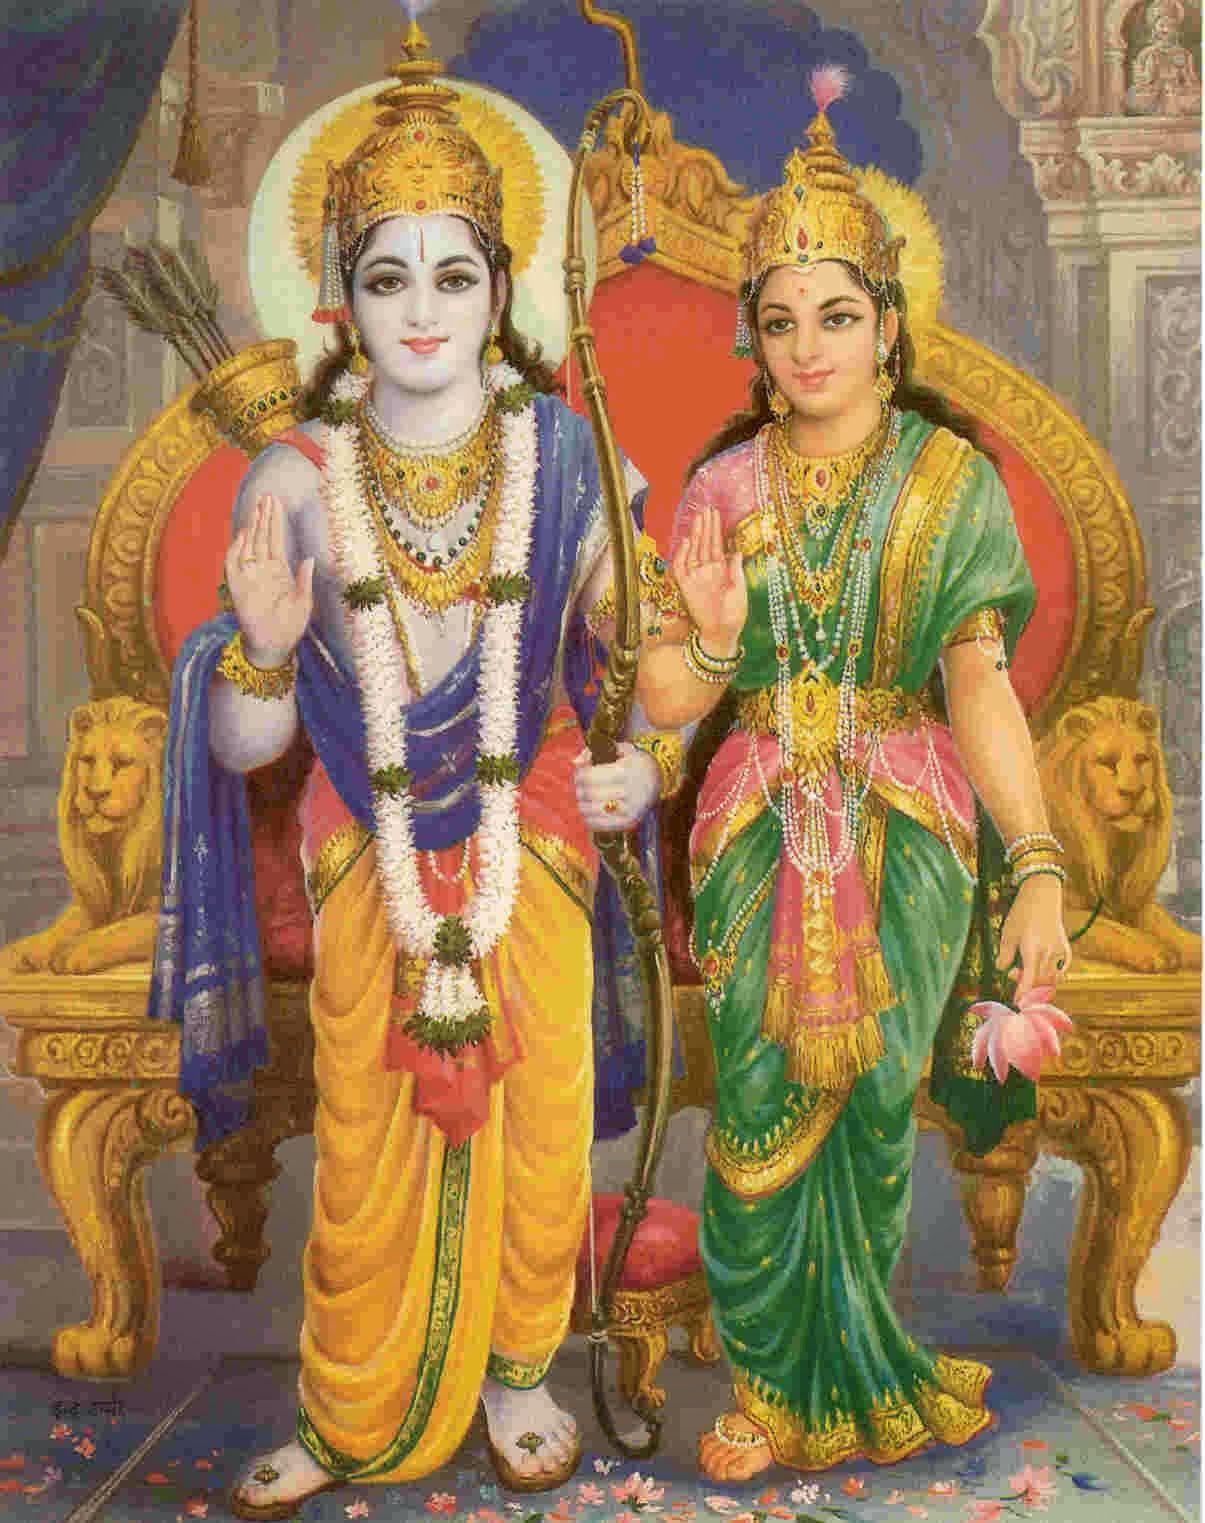 Ram Sita Wallpapers - Top Free Ram Sita Backgrounds - WallpaperAccess